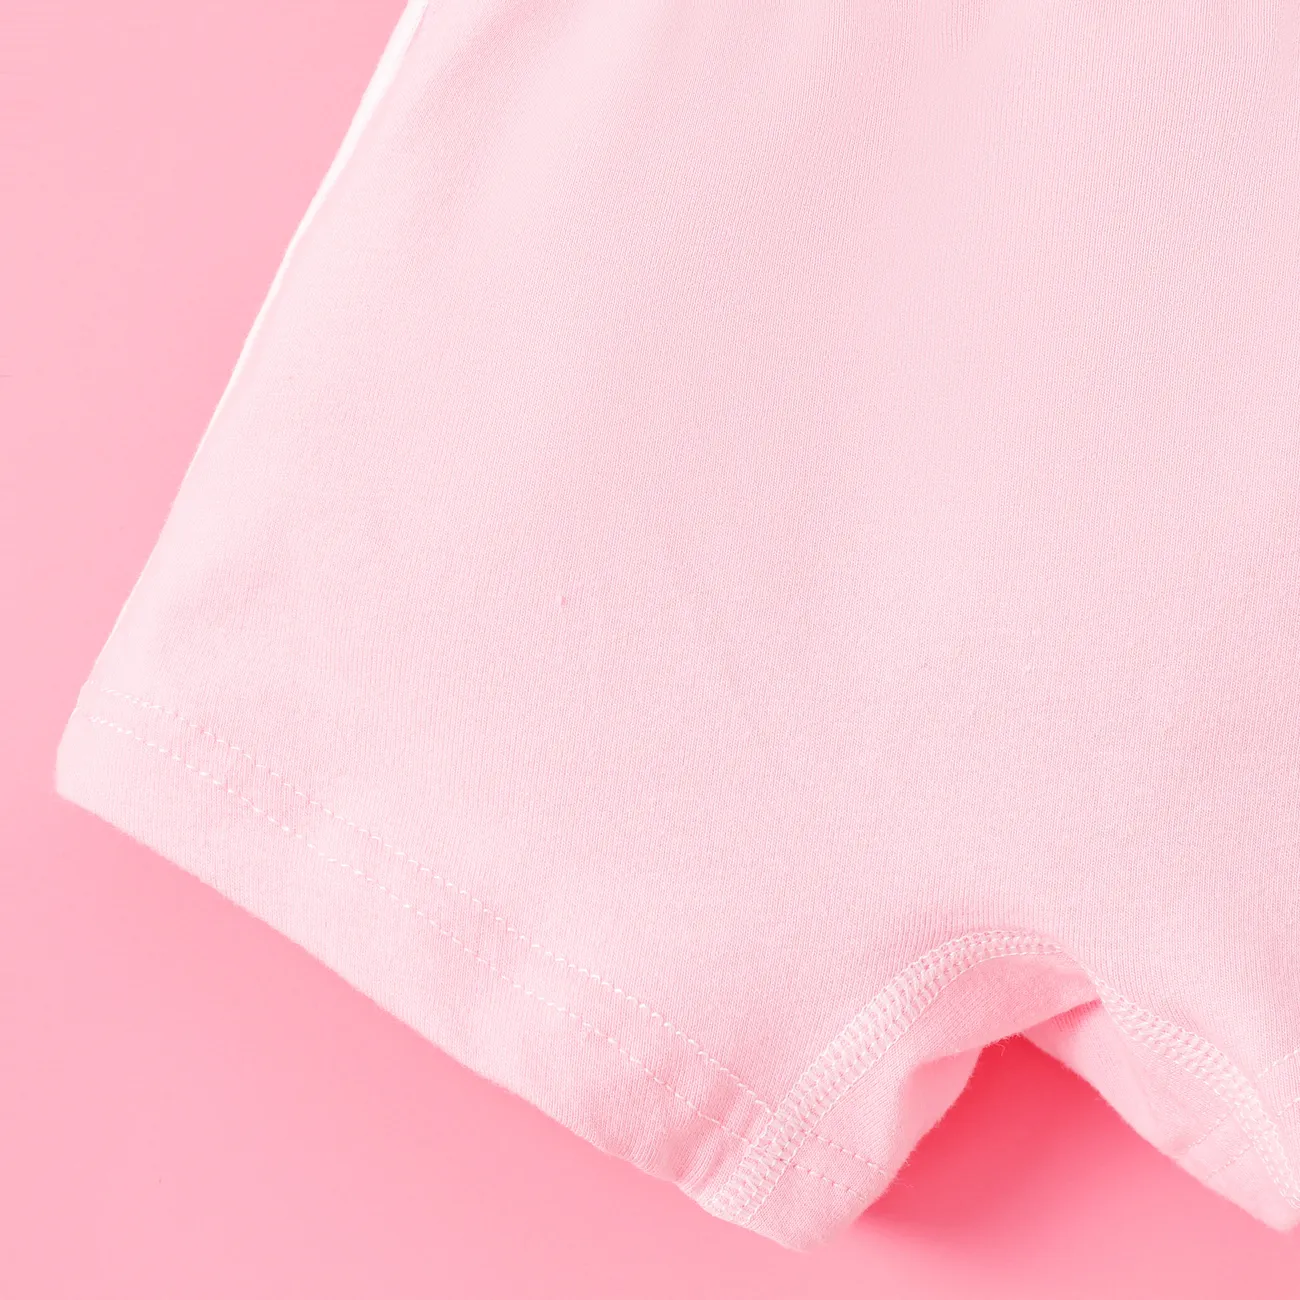 Childlike Animal Pattern Tight Underwear Set for Girls (1pc), Cotton-Chlorofibre Material Pink big image 1